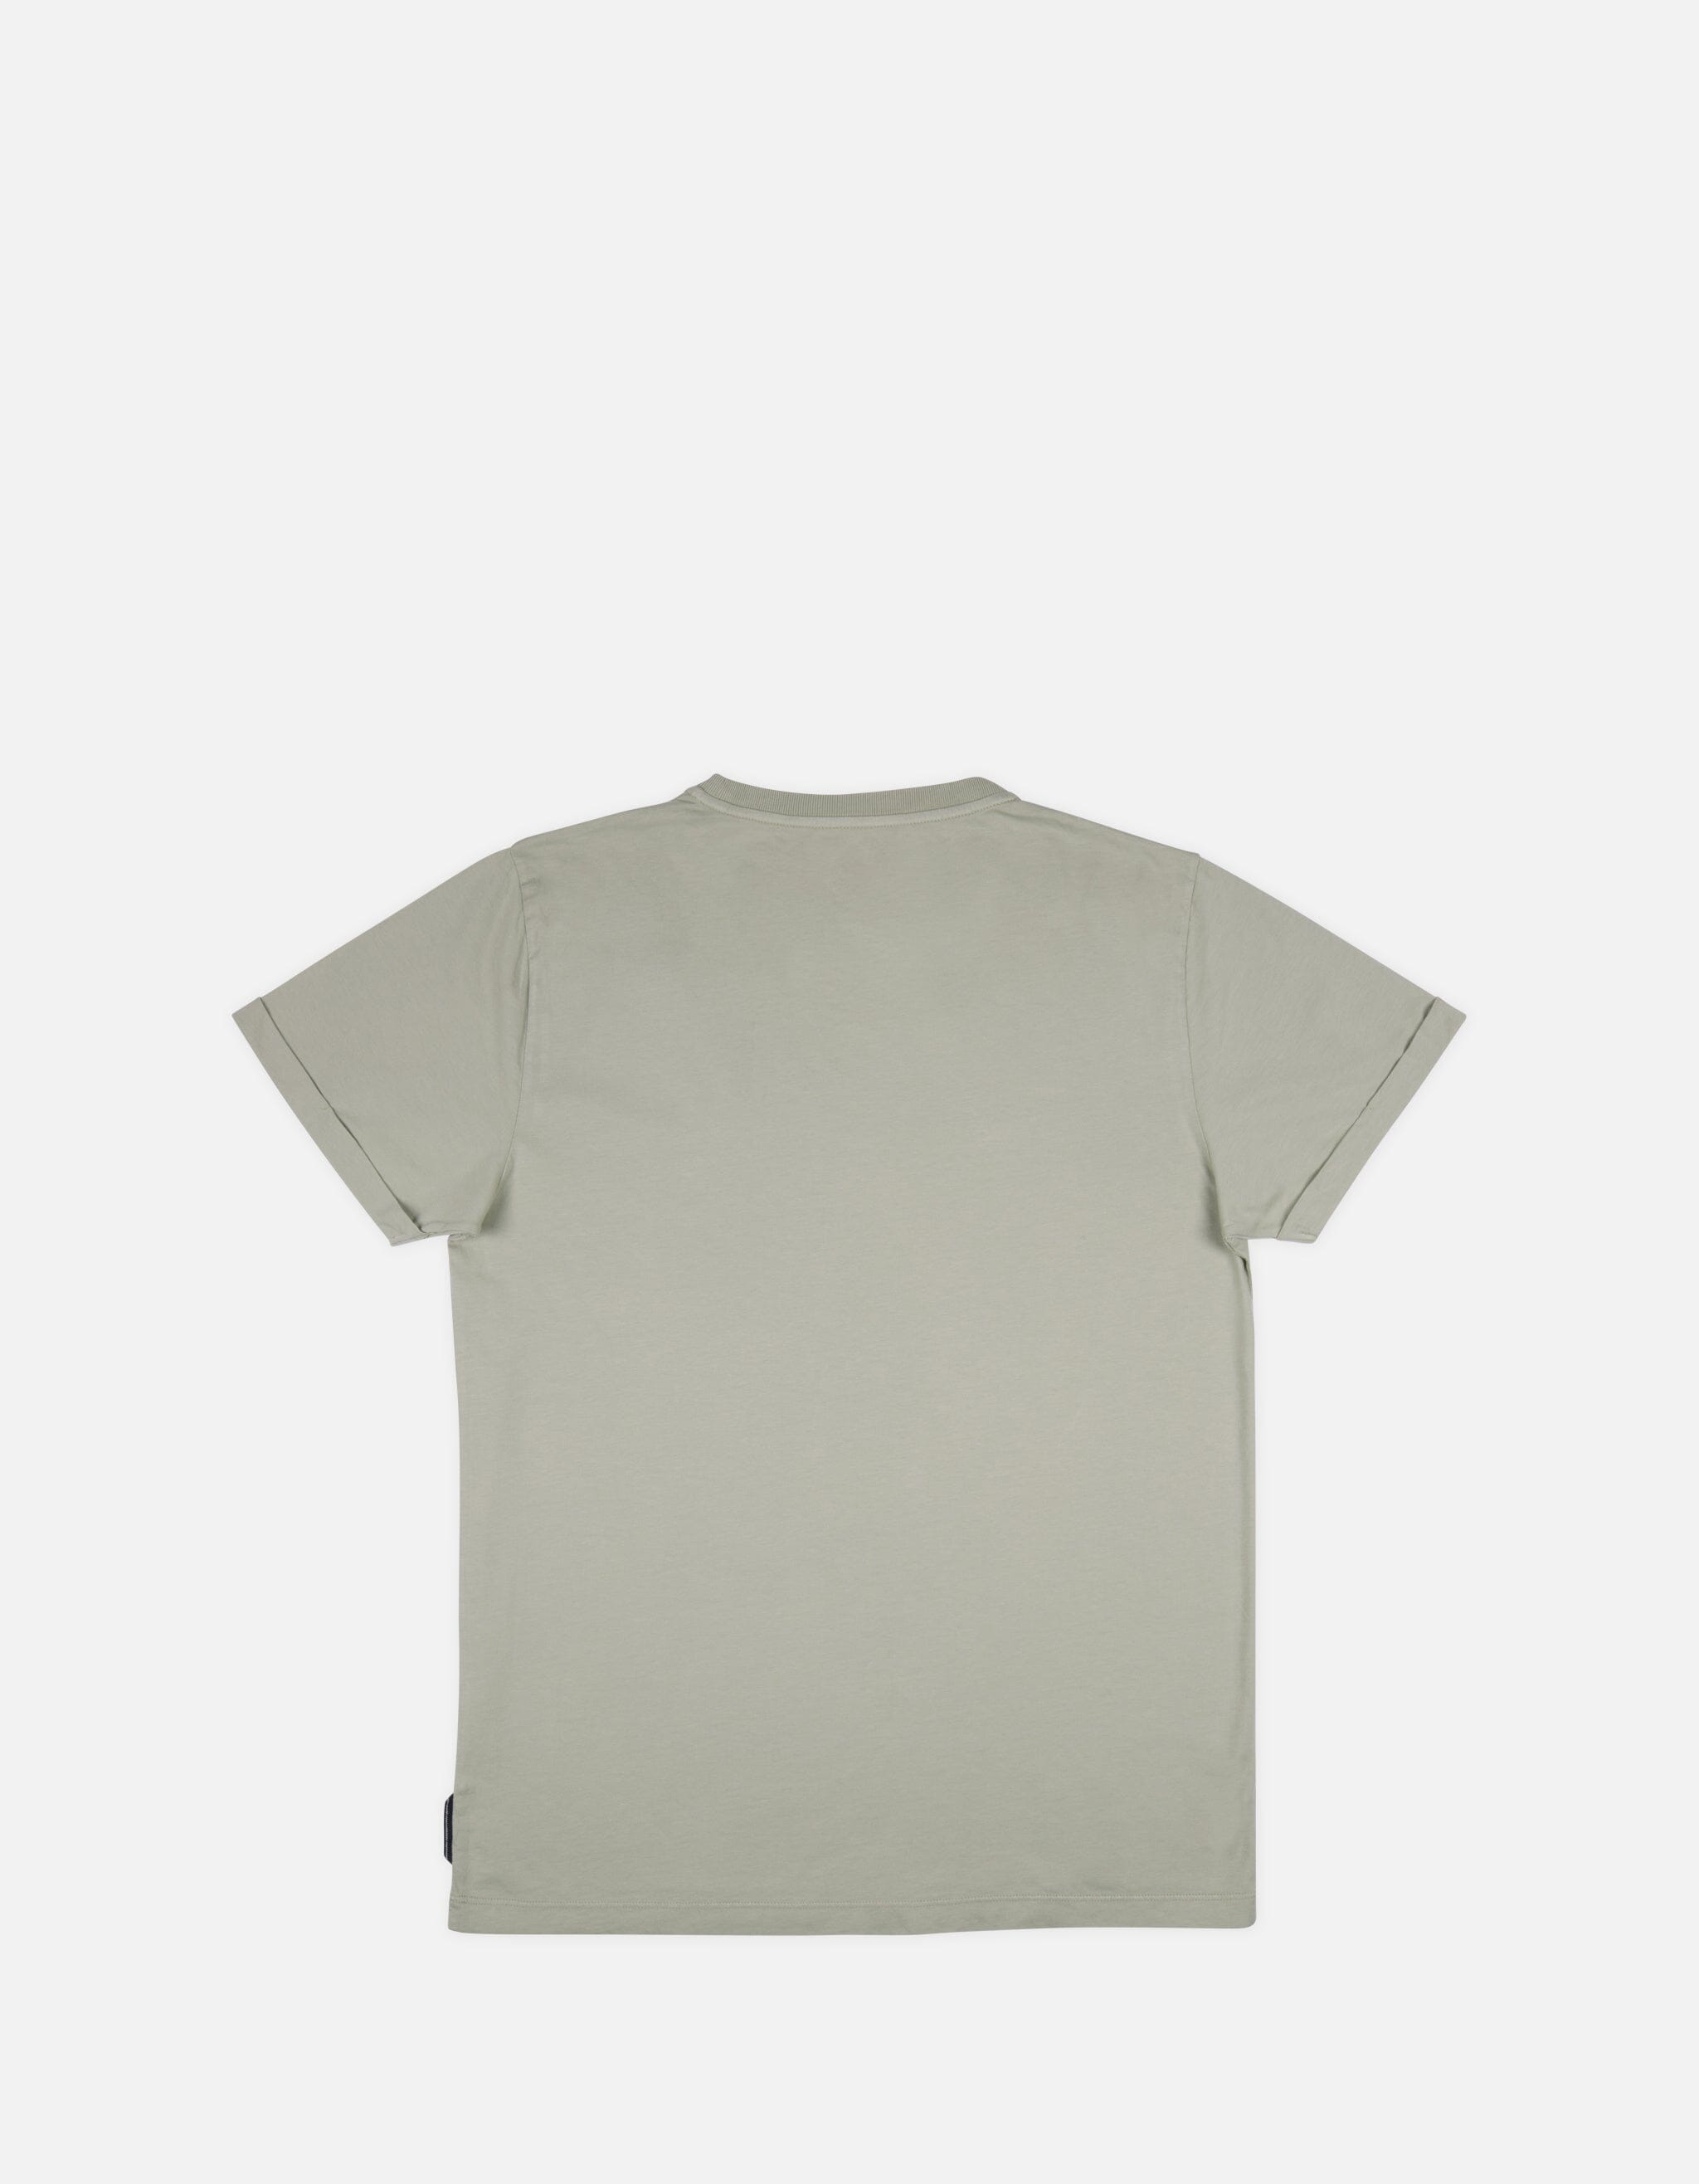 Jofe - 04. Green Tea - Embroidered T-Shirts - Jofe MACKEENE 